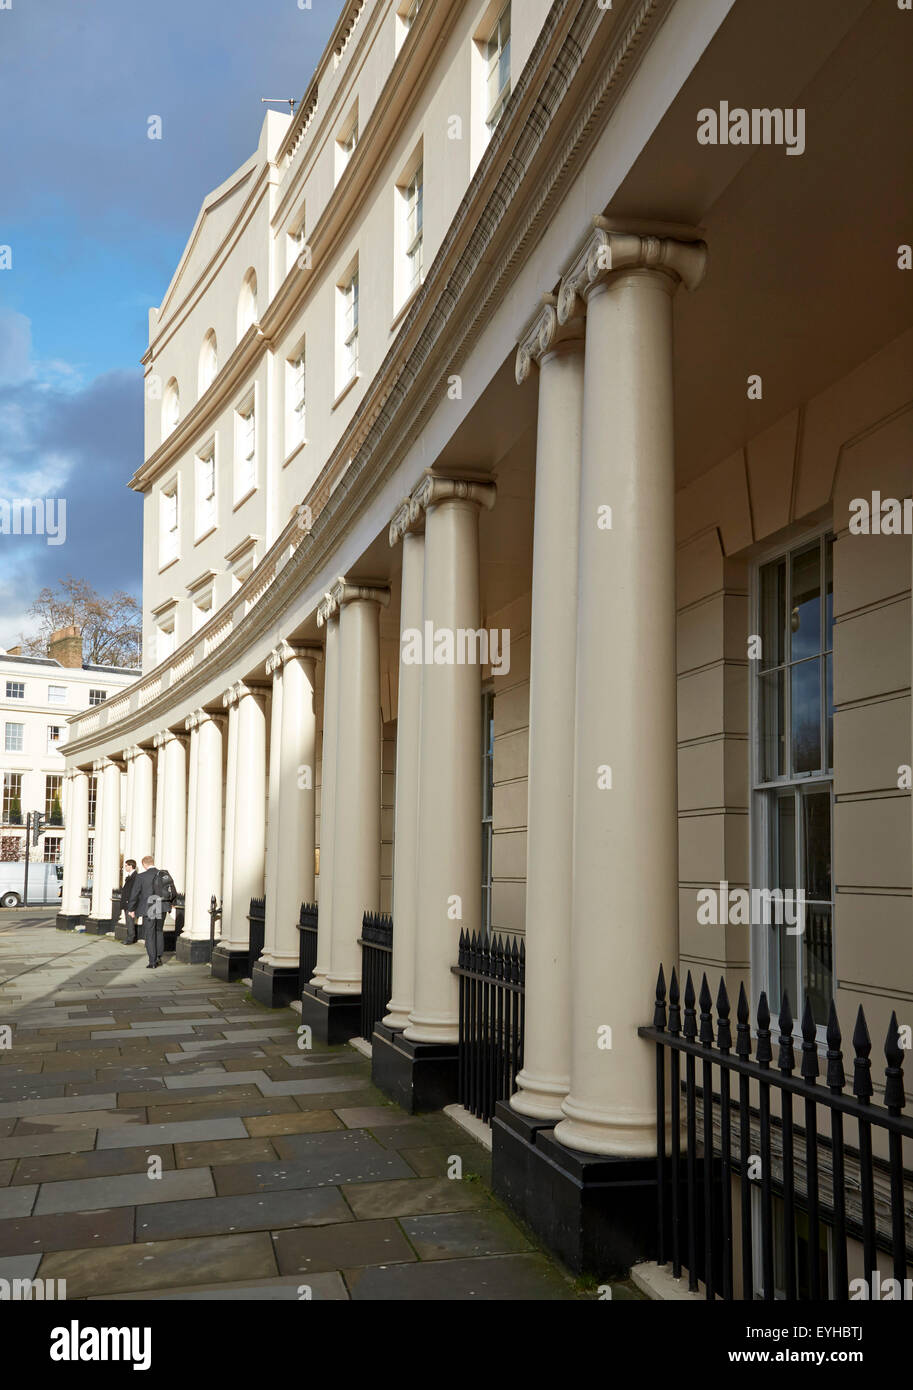 Terrace London. Commerical stock portfolio (continued), na, United Kingdom. Architect: na, 2015. Stock Photo